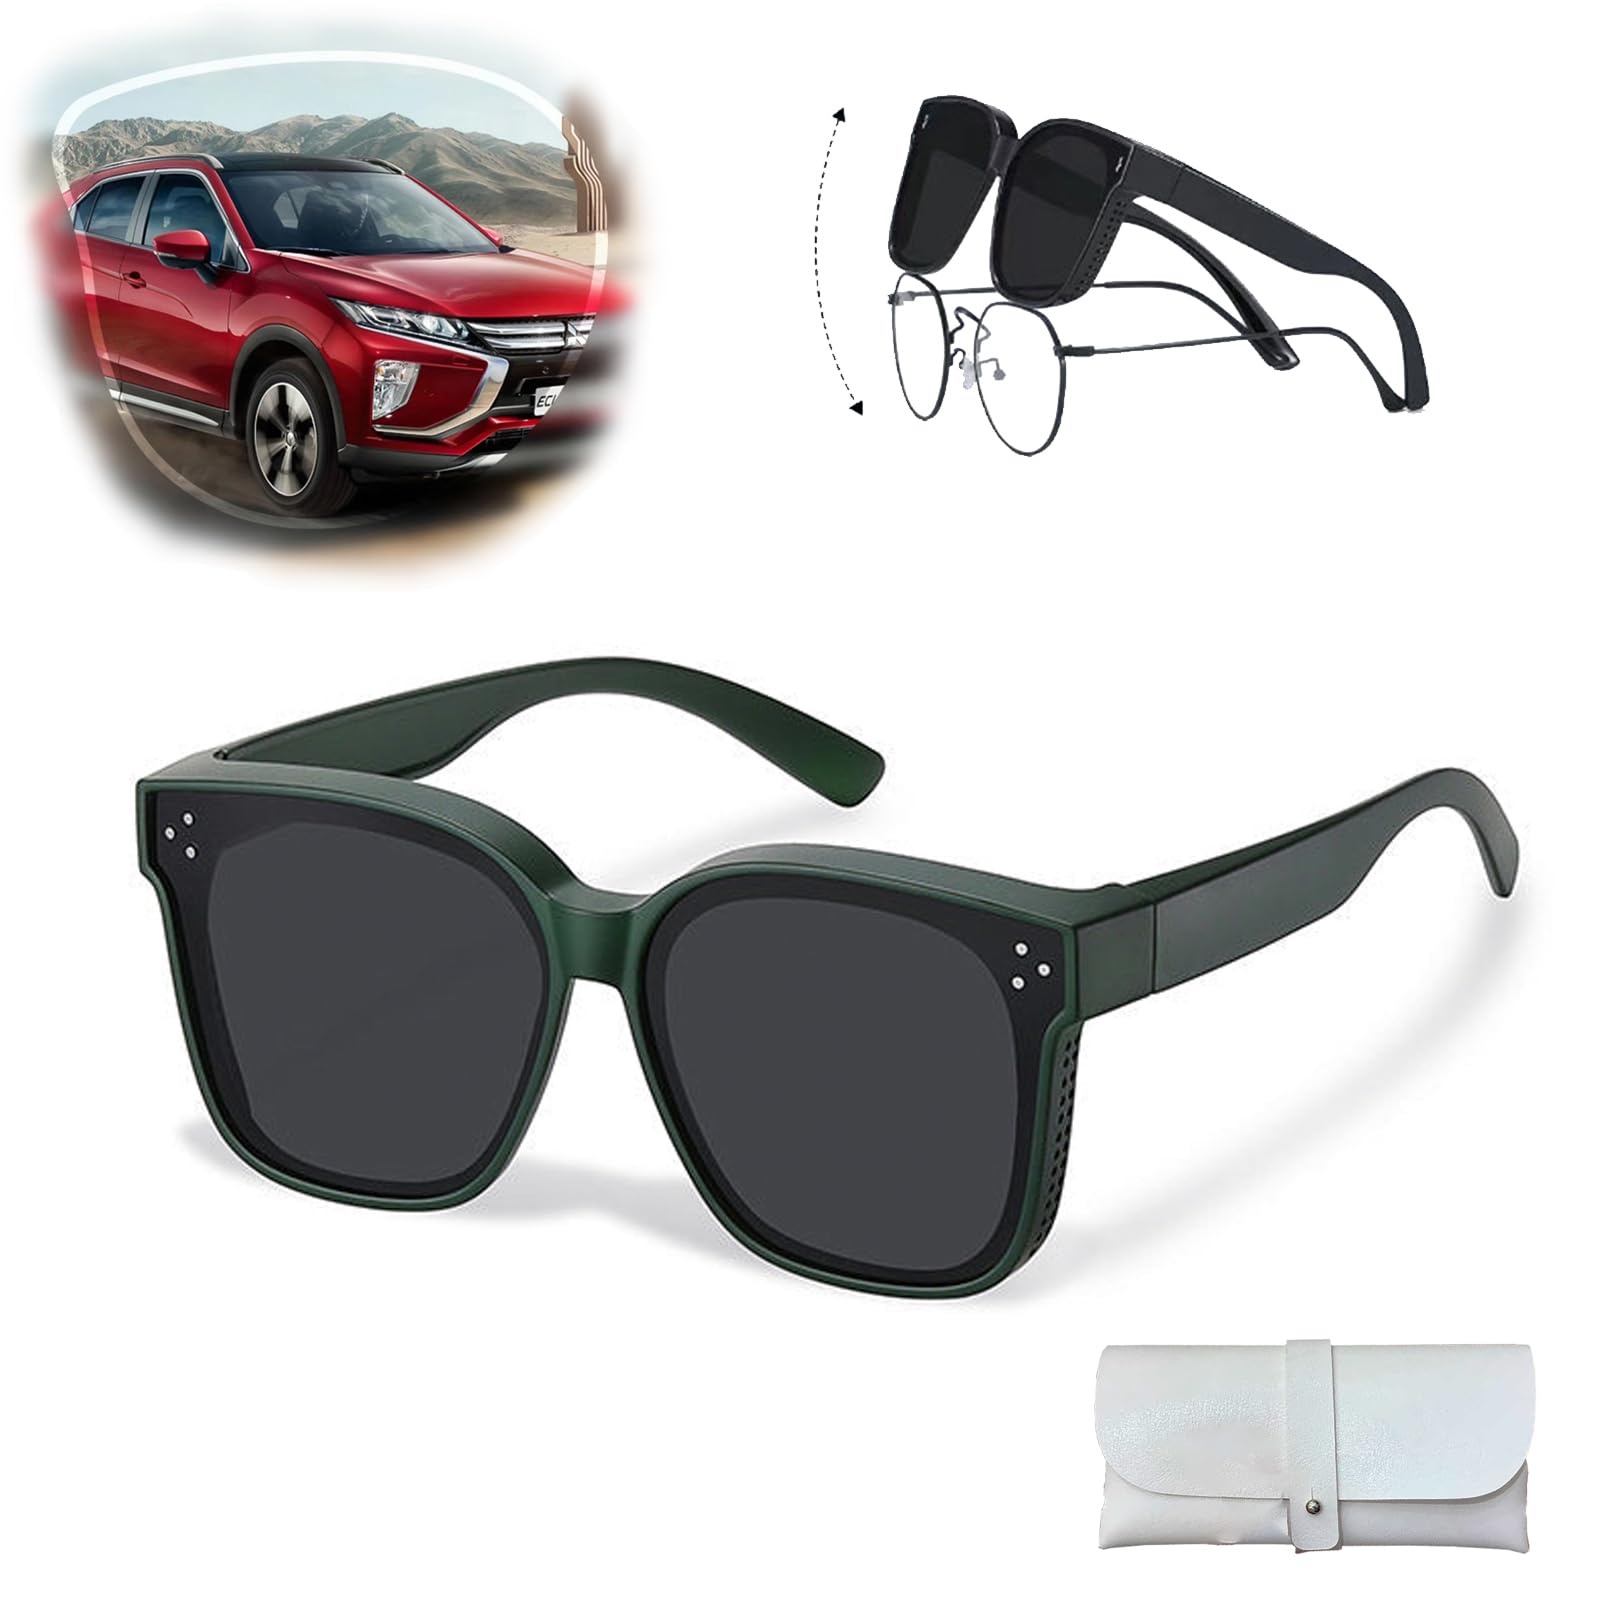 behound Universal Models of Myopic Sunglasses - Uv400 Protective Lenses, Sunglasses Fit Over Glasses Suitable for Men Women (Dark Green)